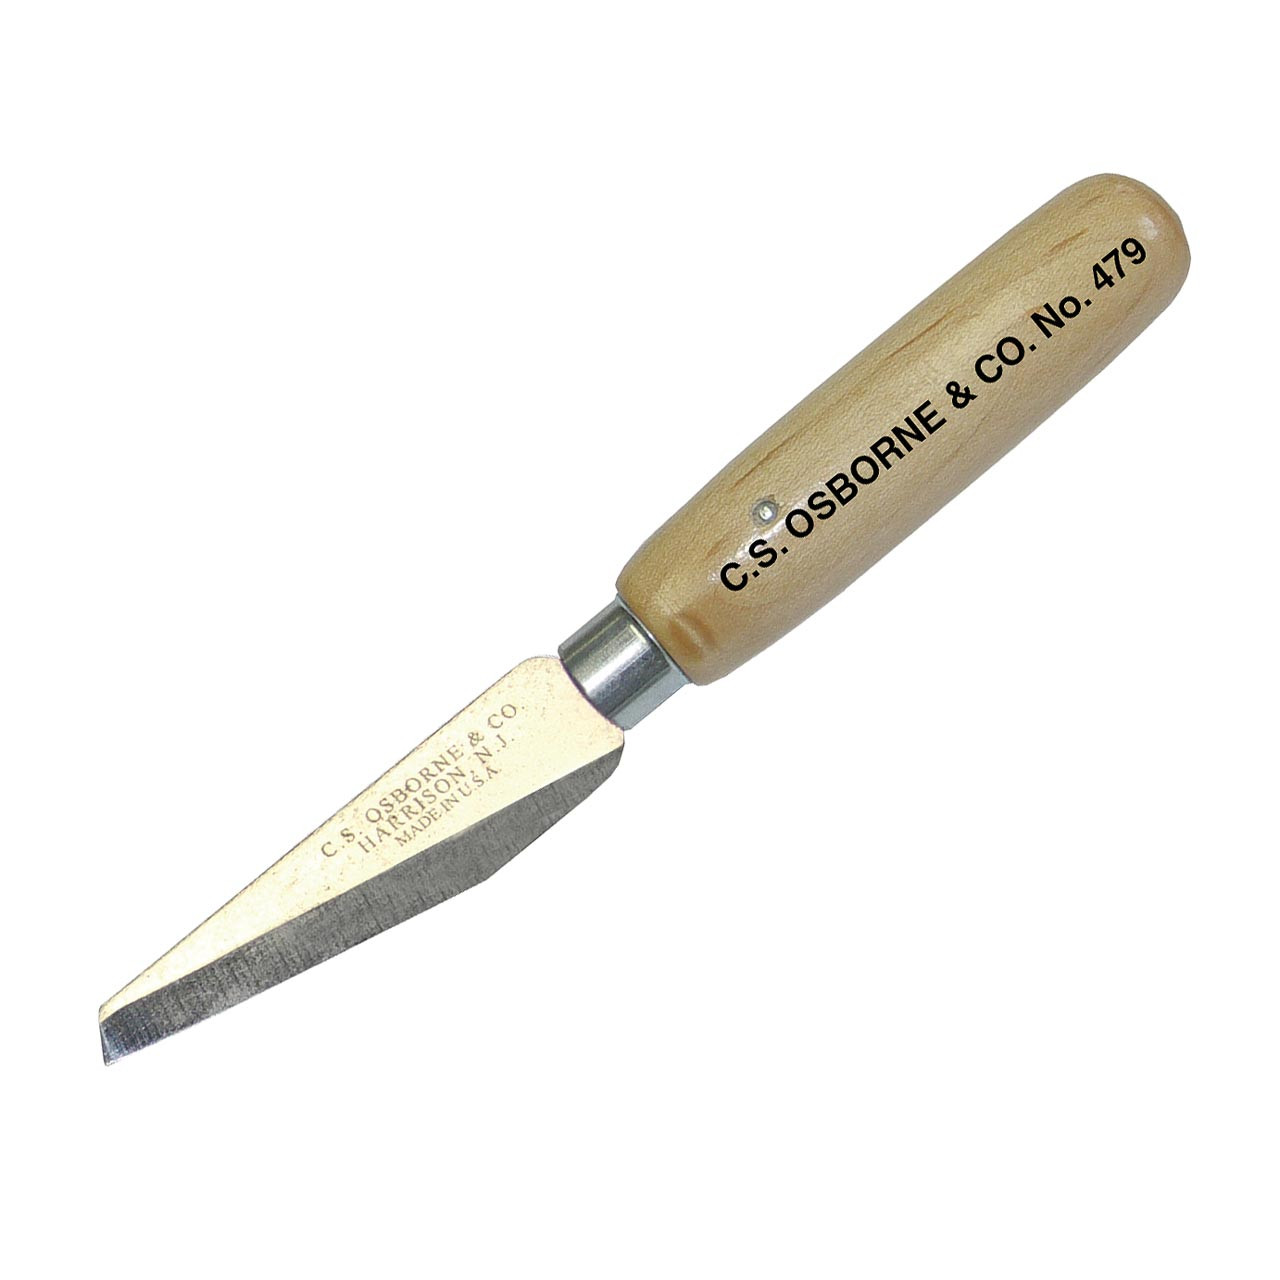 Signature skiving knife - Angled bevel